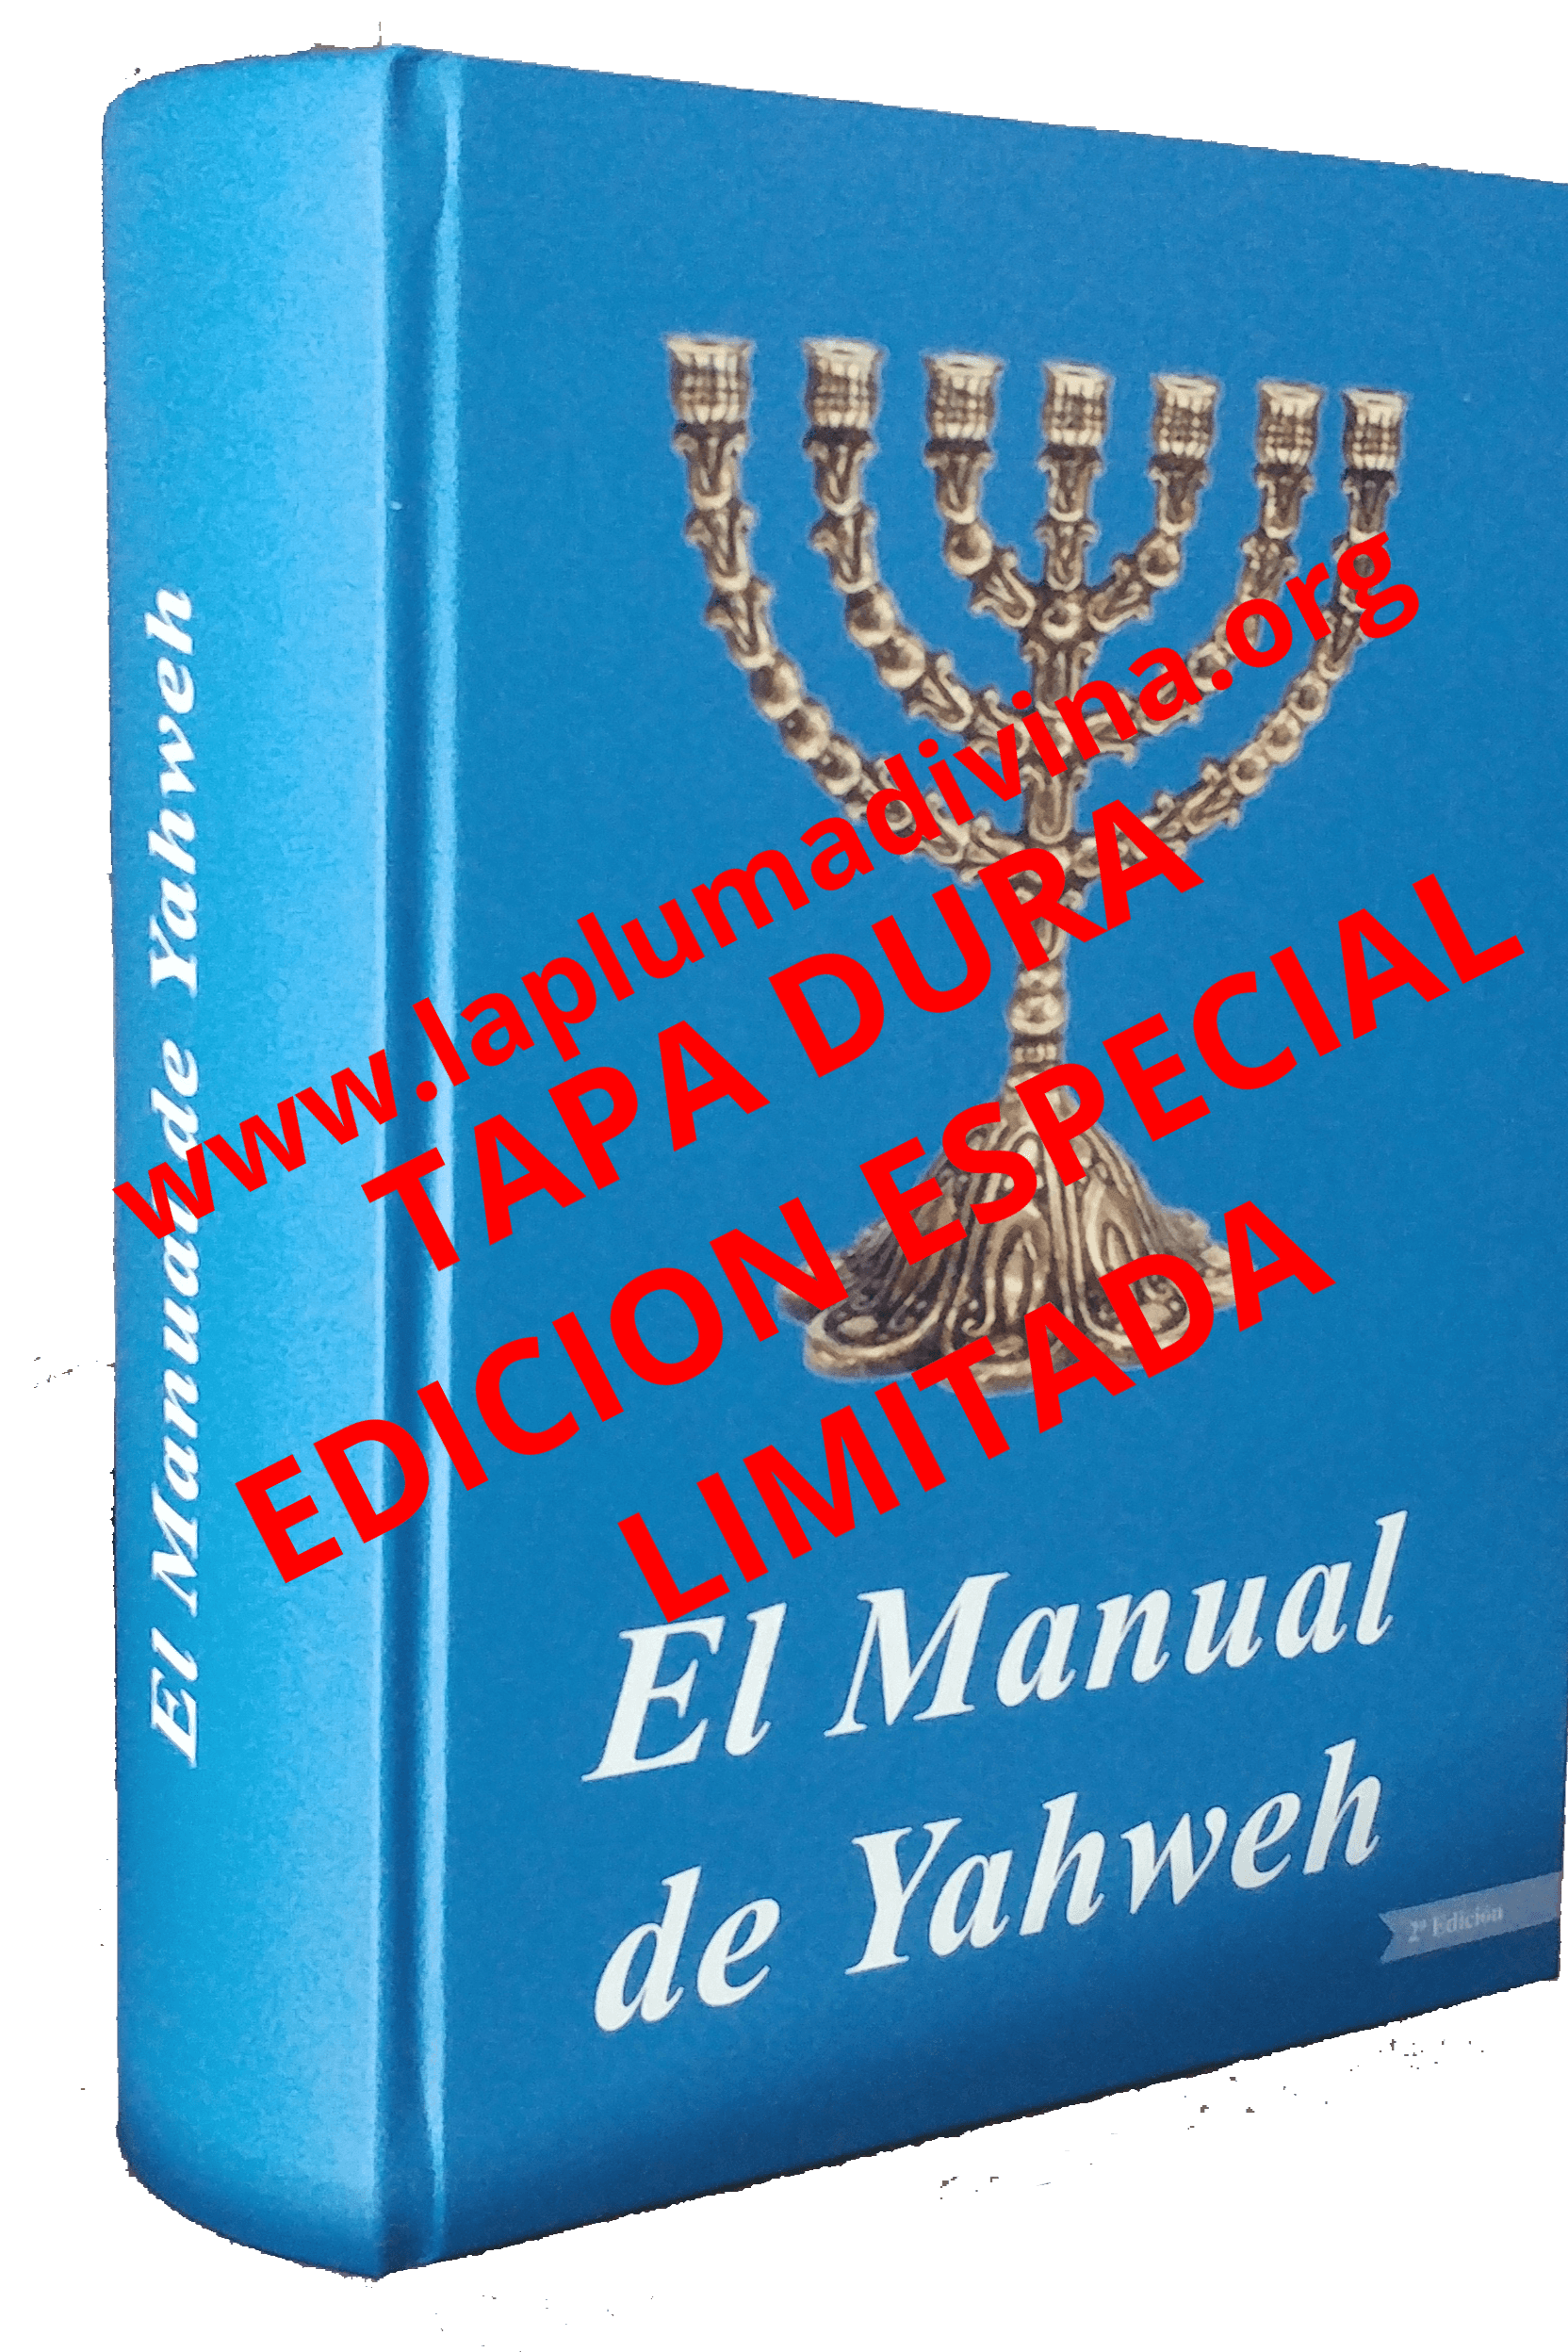 El Manual de Yahweh - Miguel Atalaya - #LaPlumaDivina